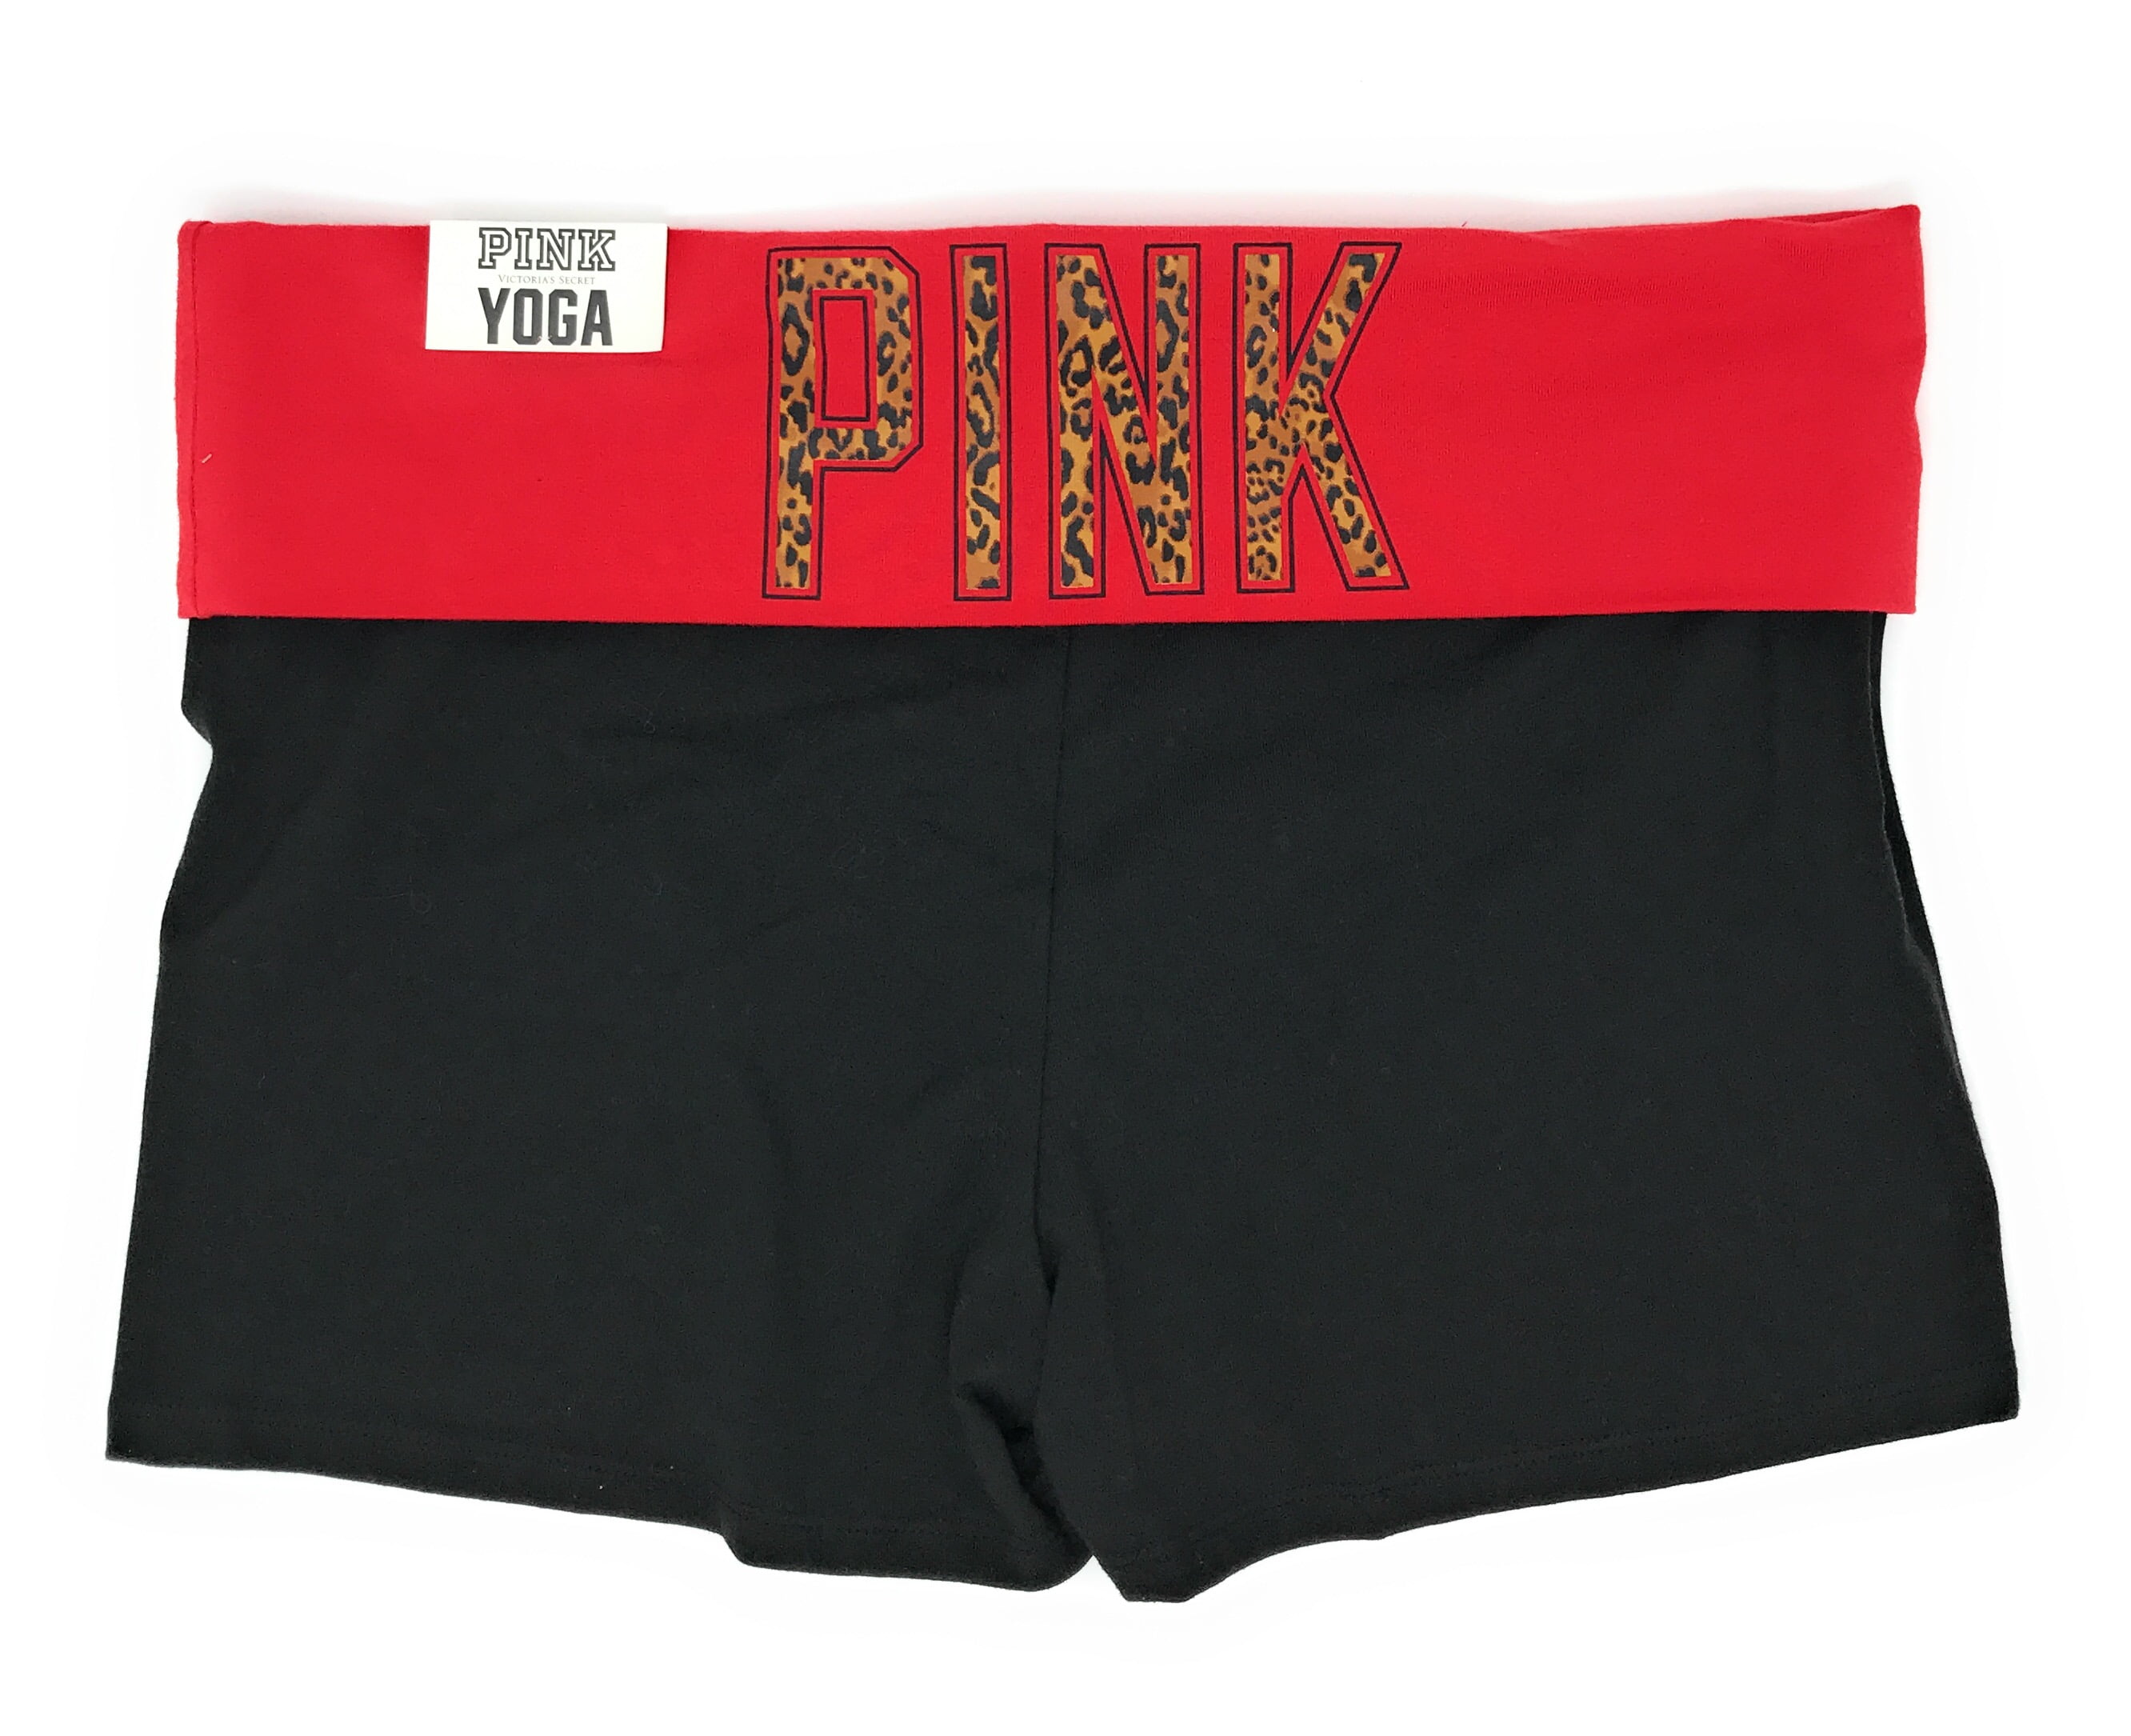 Victoria's Secret PINK Yoga Shortie Shorts 